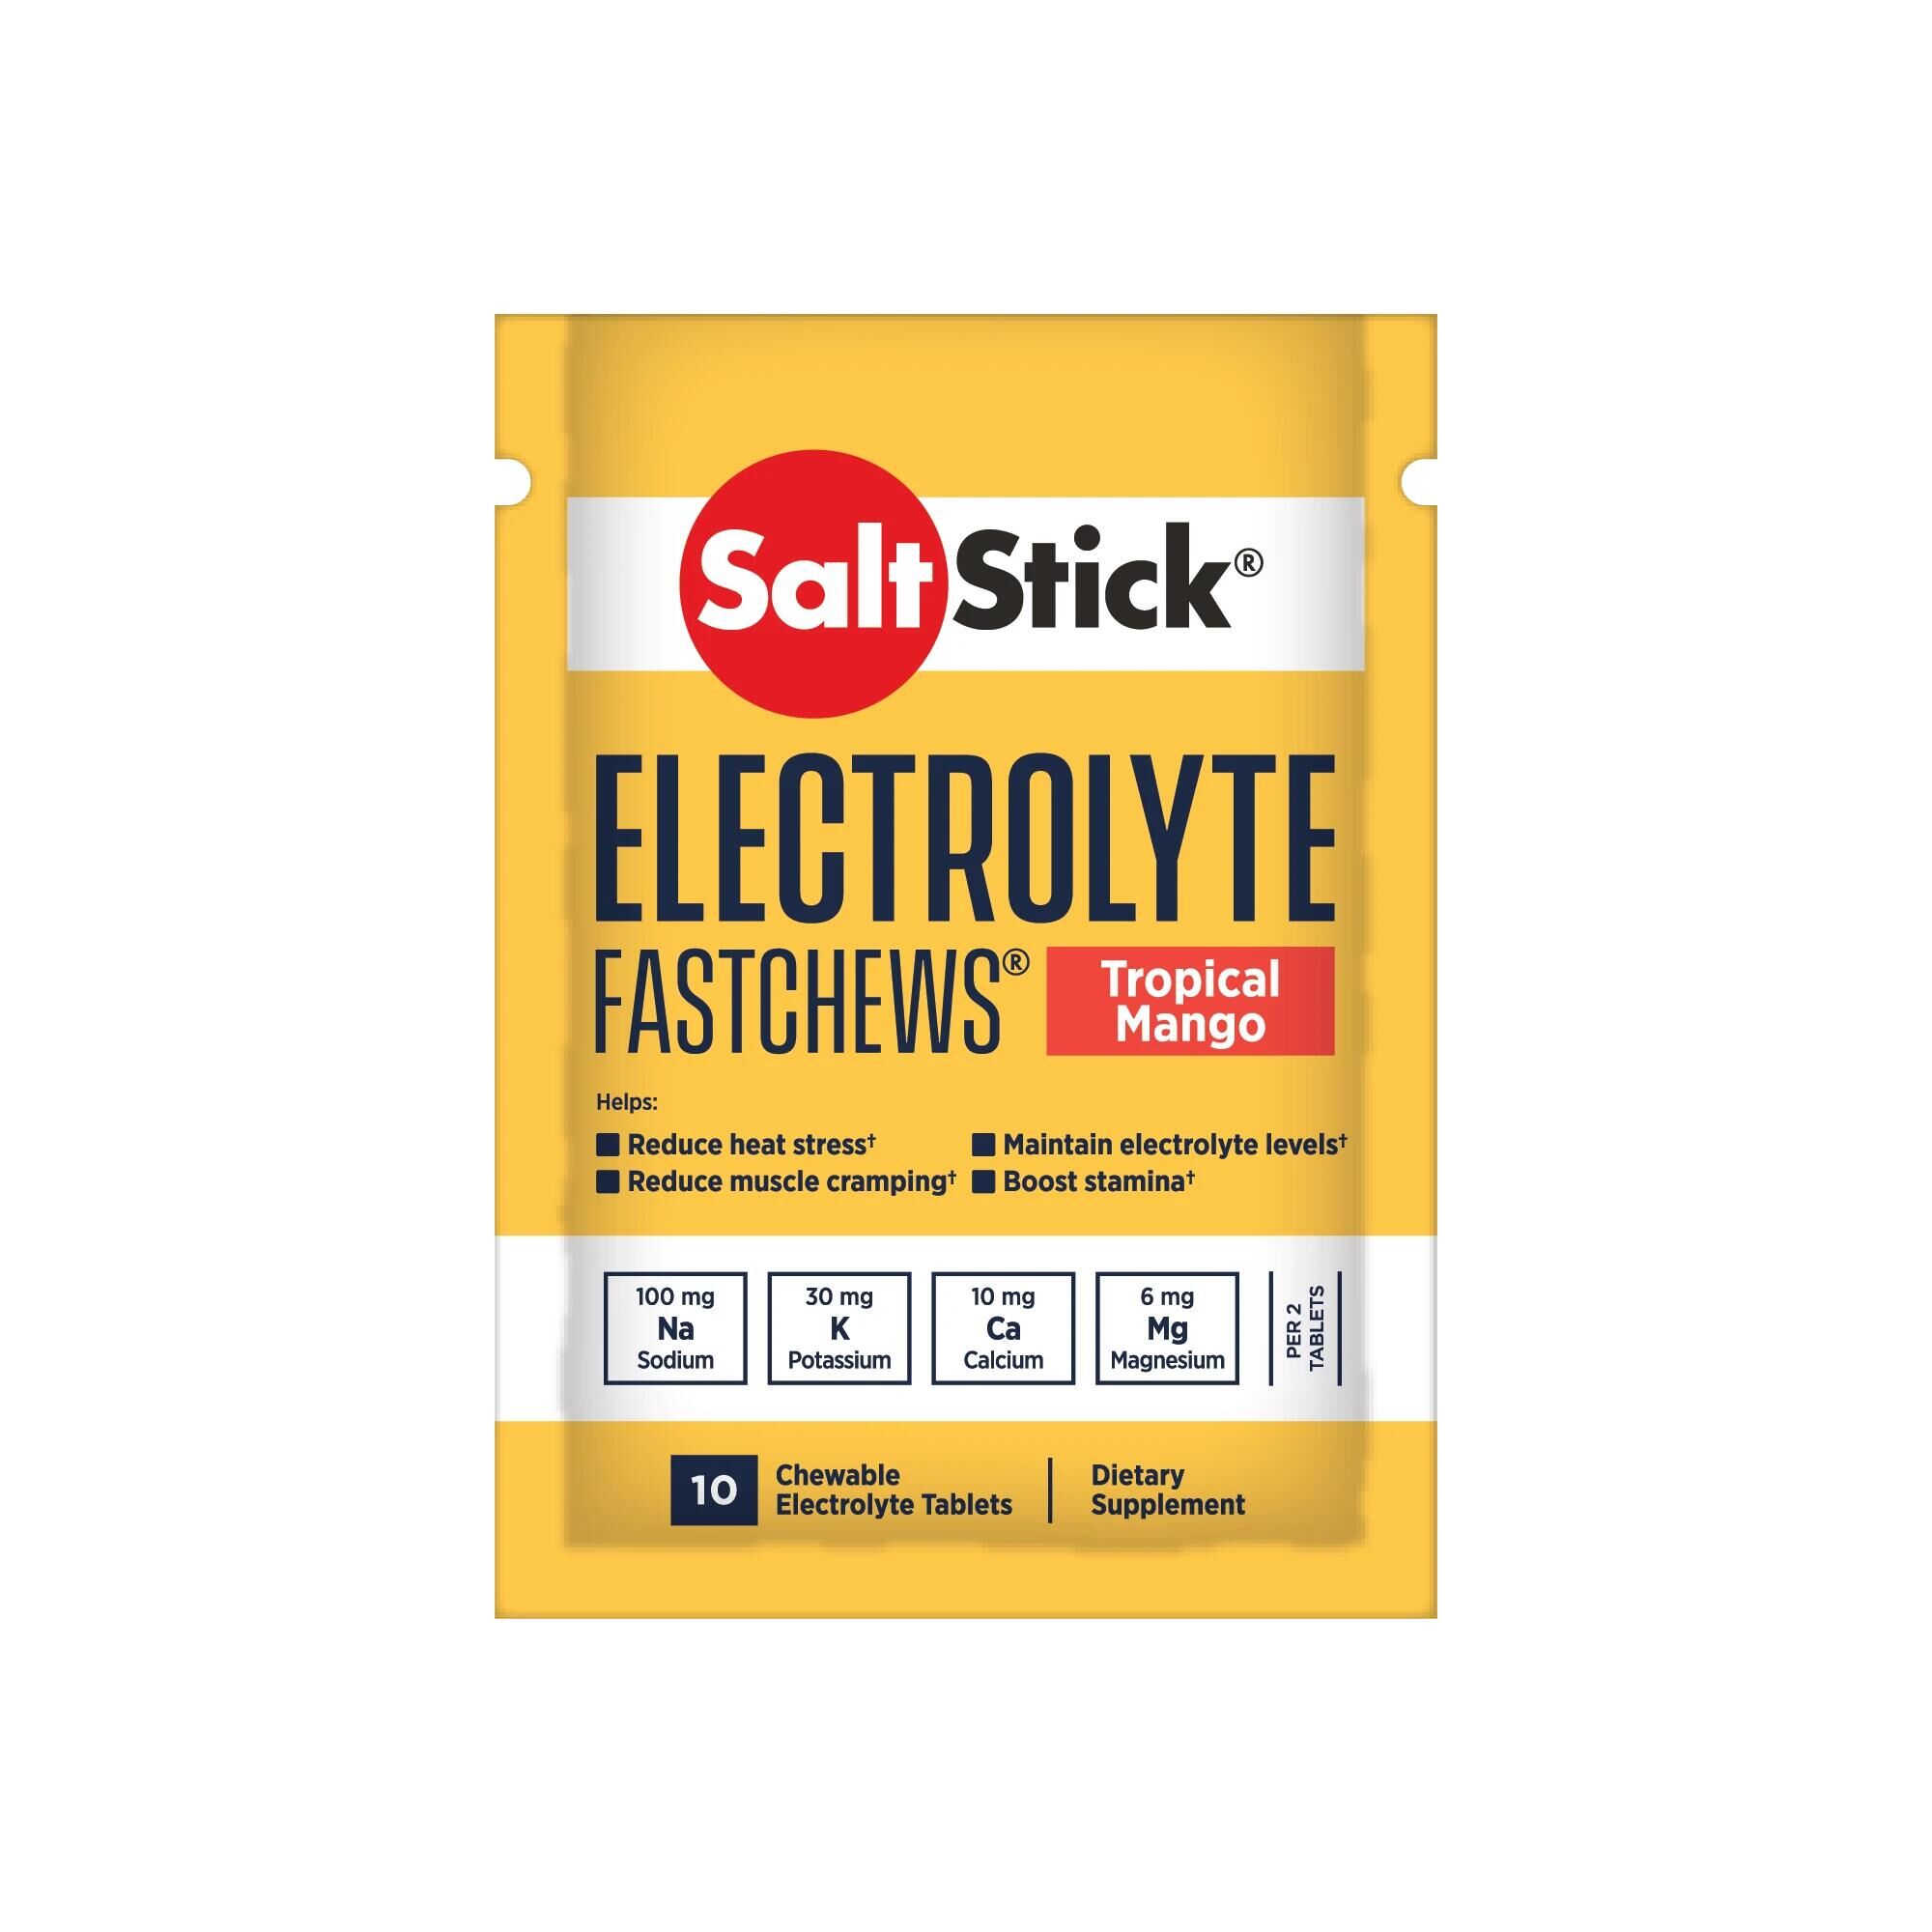 SALTSTICK Electrolyte FastChews - Box of 12 Packs